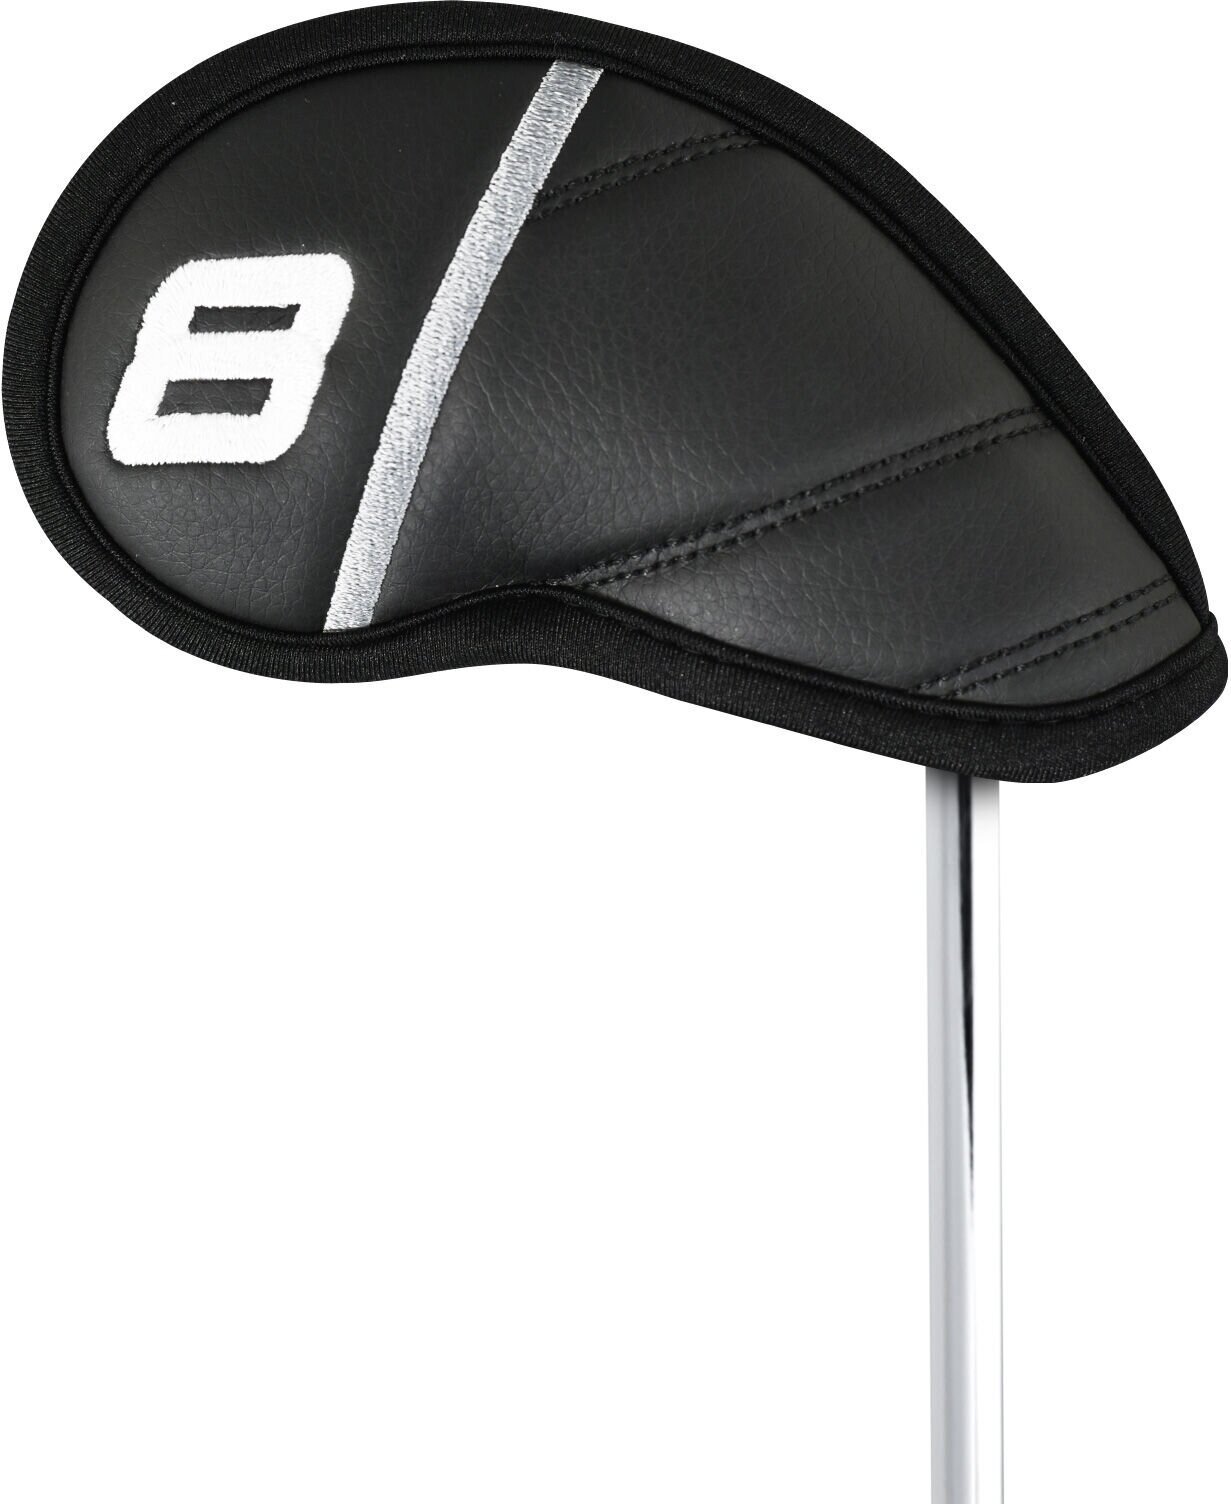 Headcovers Masters Golf Headkase II Iron Covers 4-SW Black